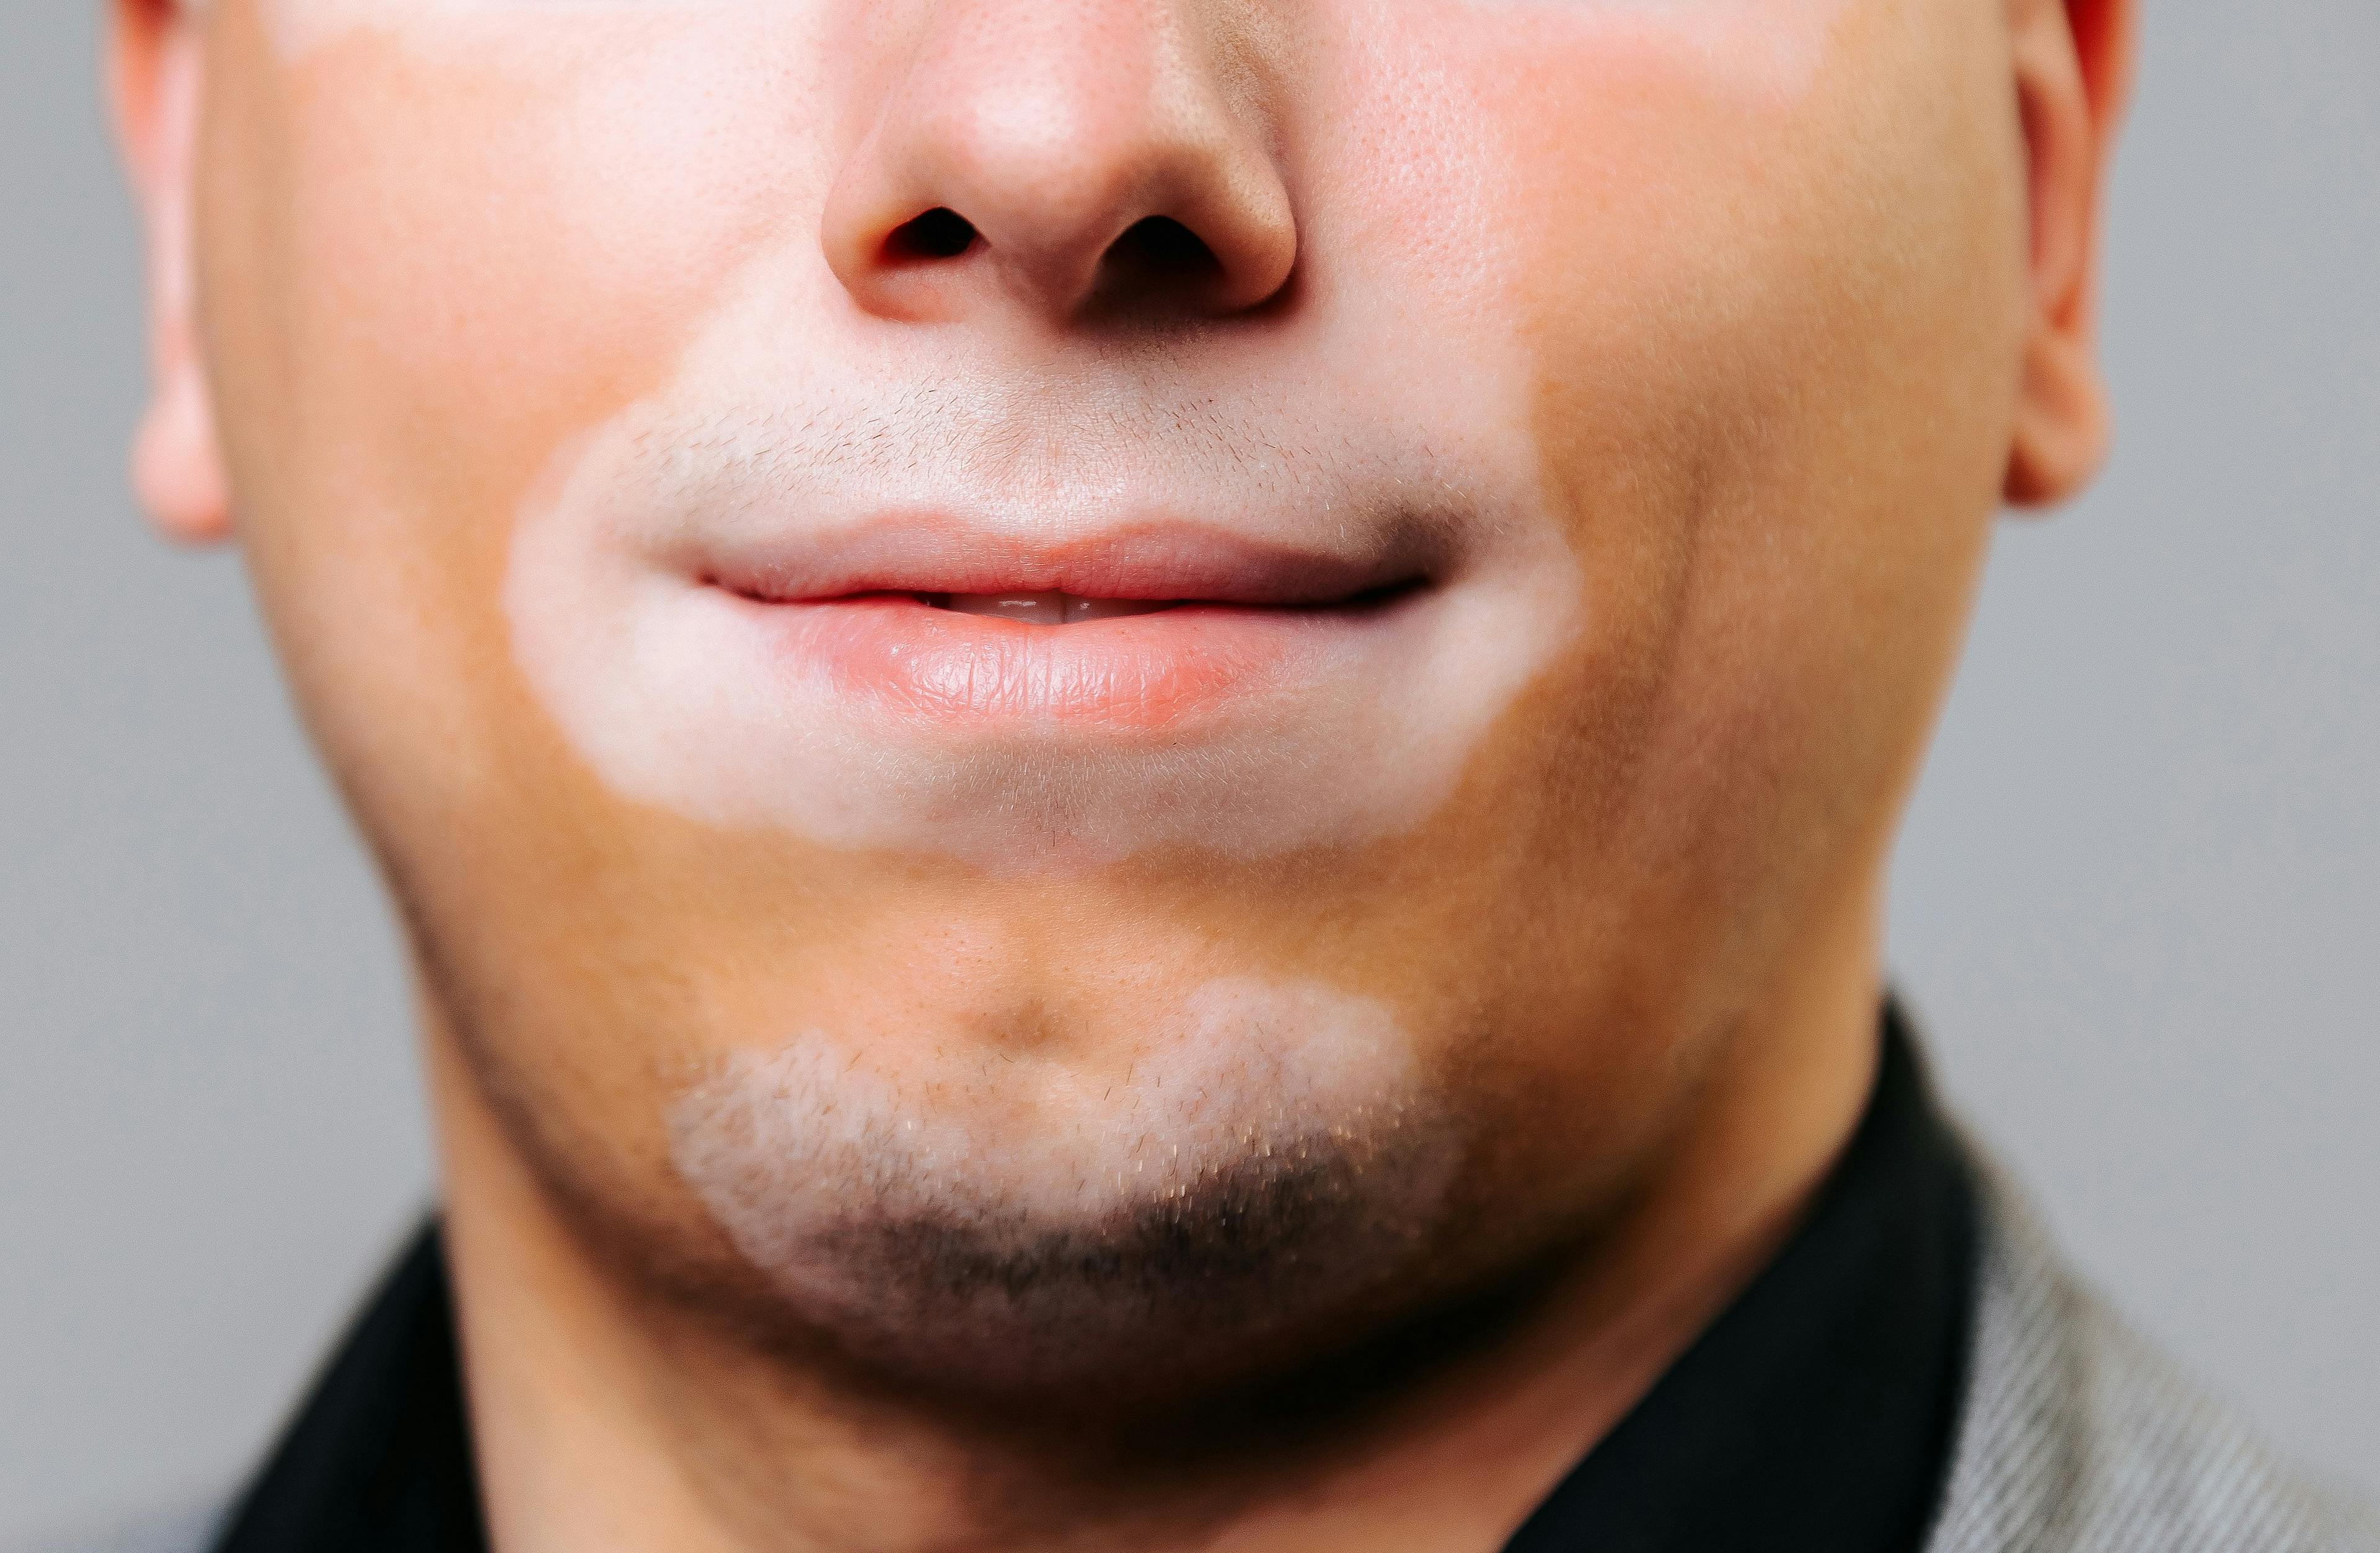 JAK Inhibitors Show Favorable Risk-Benefit Profile In Vitiligo, Especially for Facial Cases